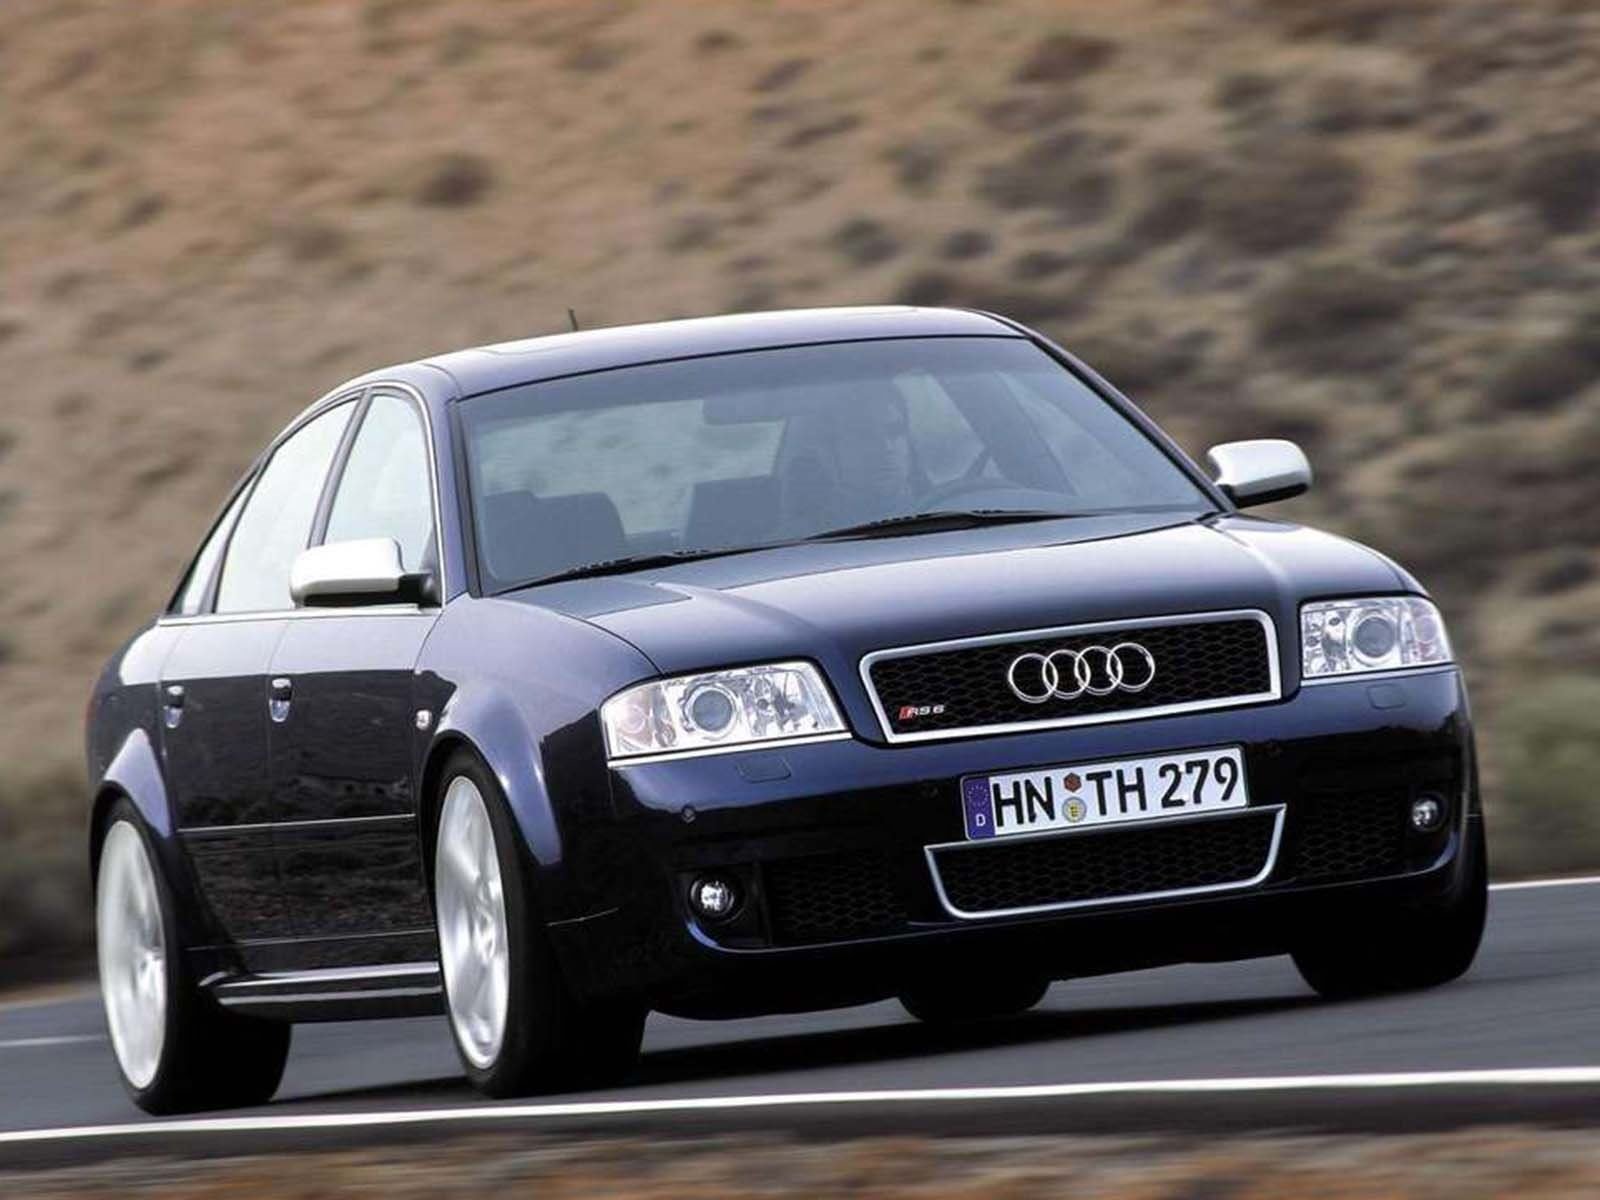 Ауди а6 с5 купить бу. Audi rs6 2002. Ауди rs6 c5. Audi rs6 c5 sedan. Ауди РС 6 2002 седан.